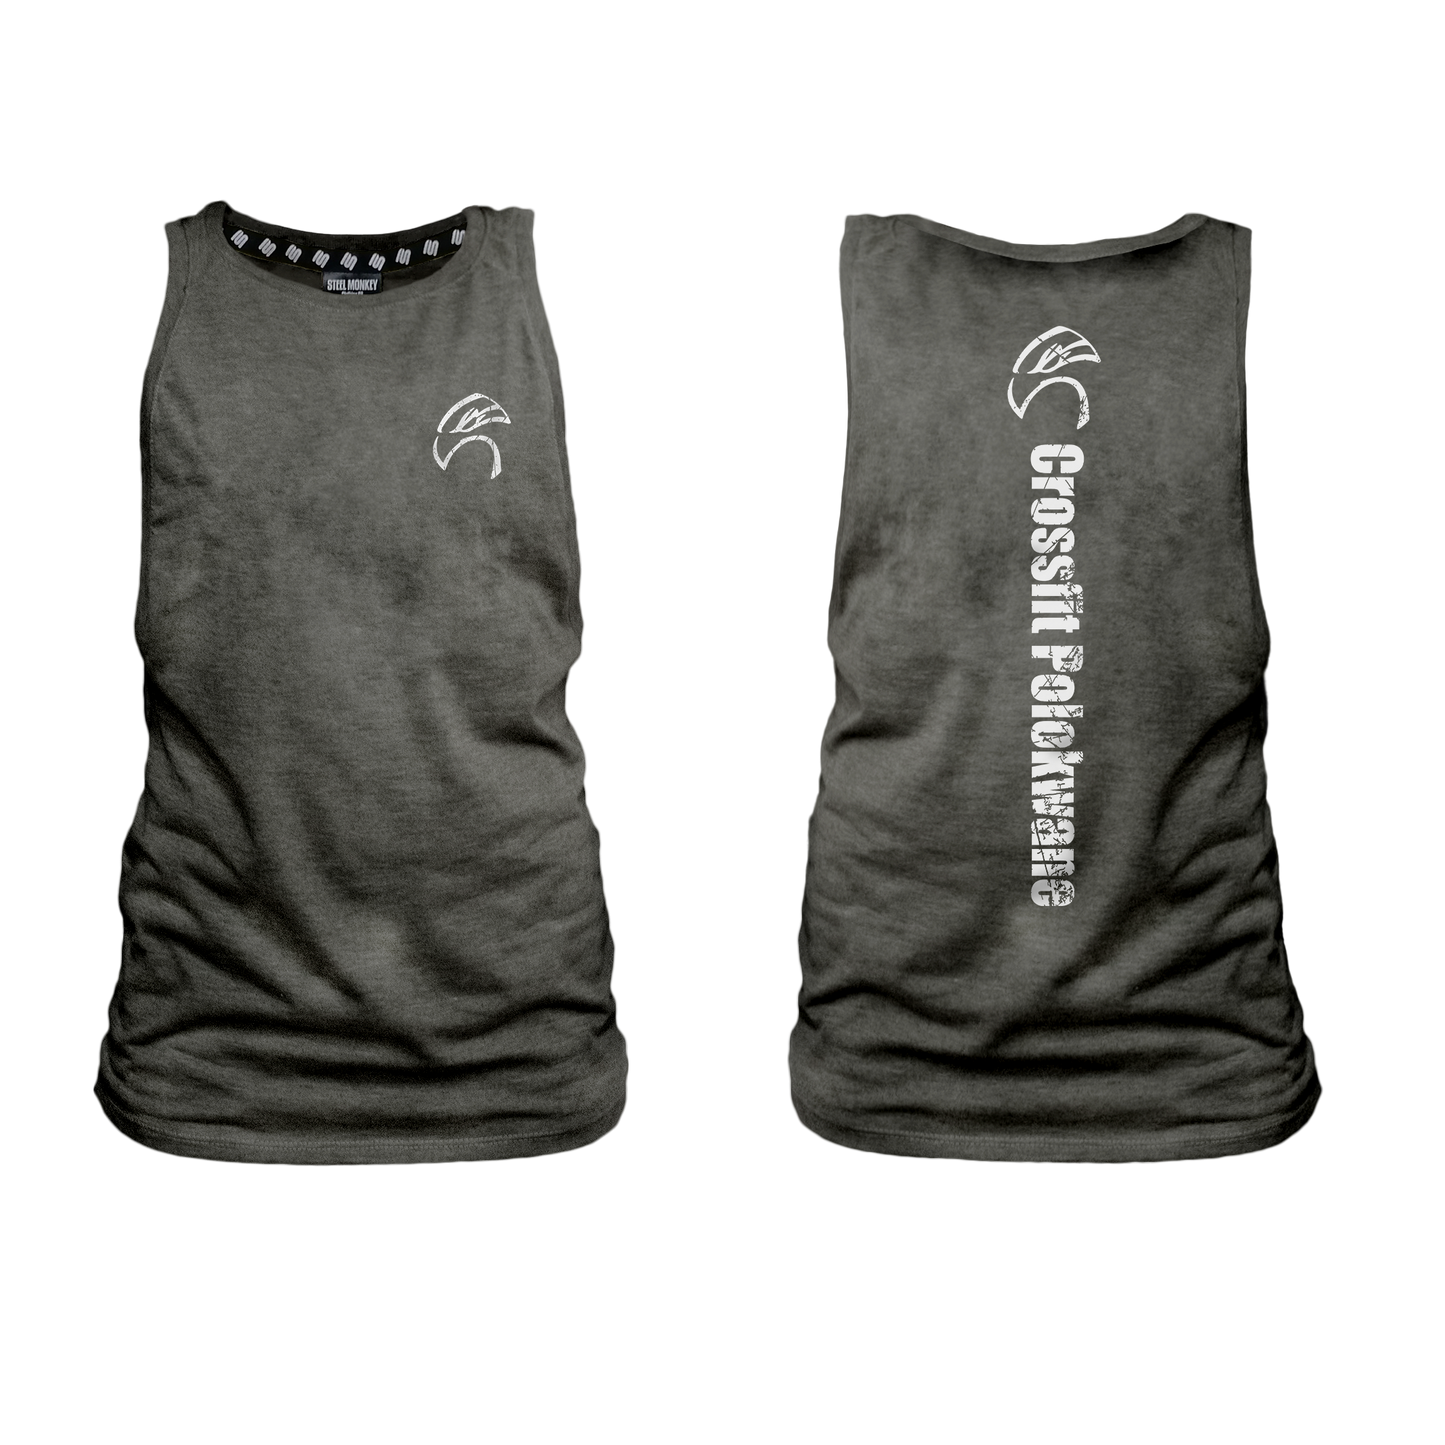 CrossFit Polokwane Ladies Muscle Tank - Charcoal Melange